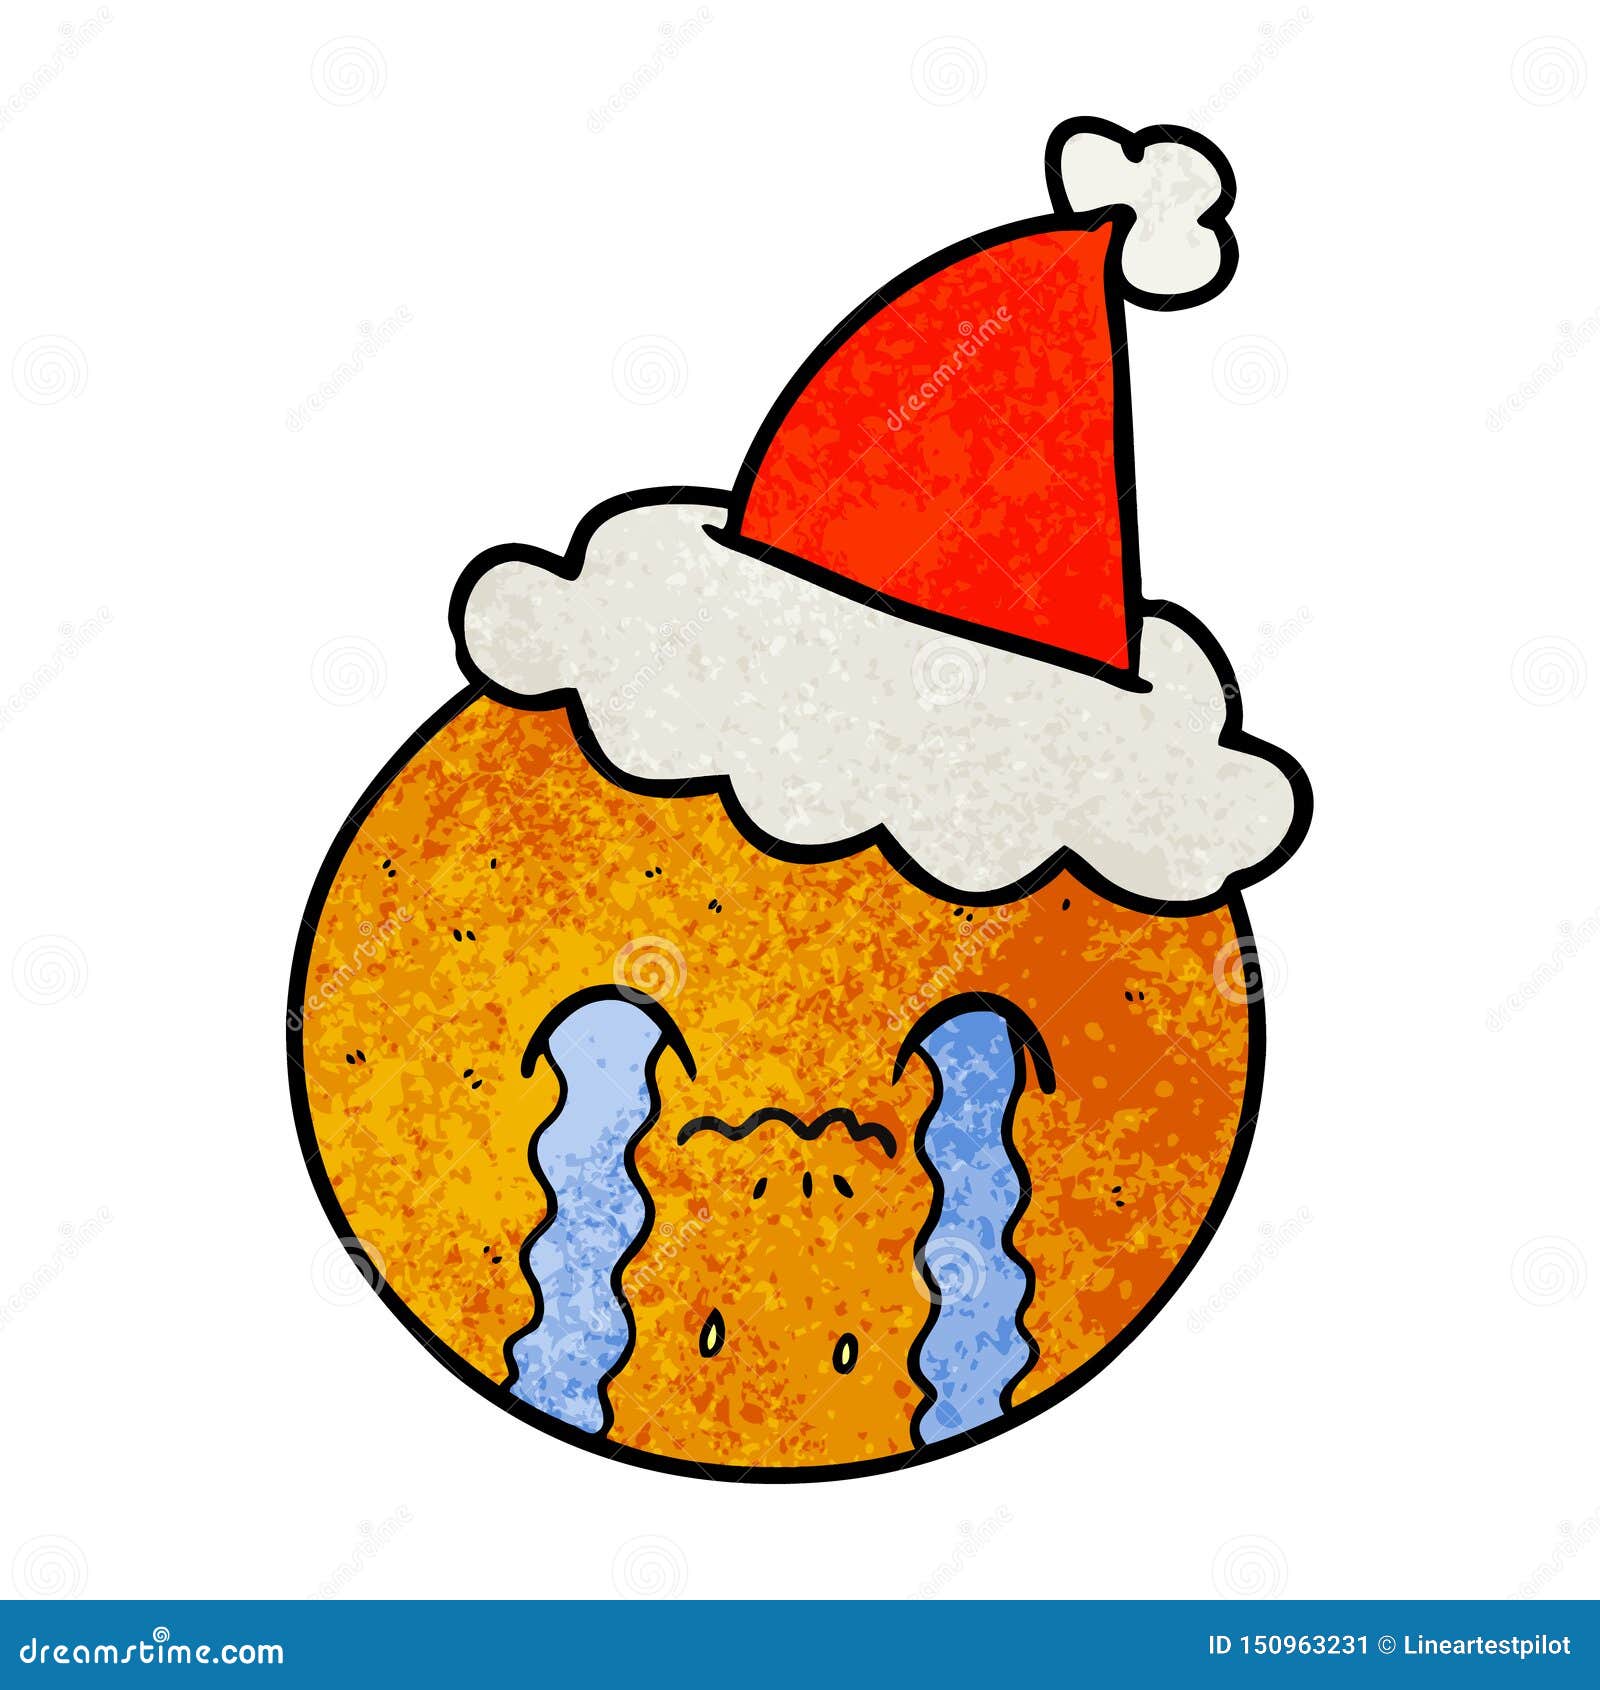 A Creative Textured Cartoon of a Orange Wearing Santa Hat Stock Vector -  Illustration of juicy, drawn: 150963231